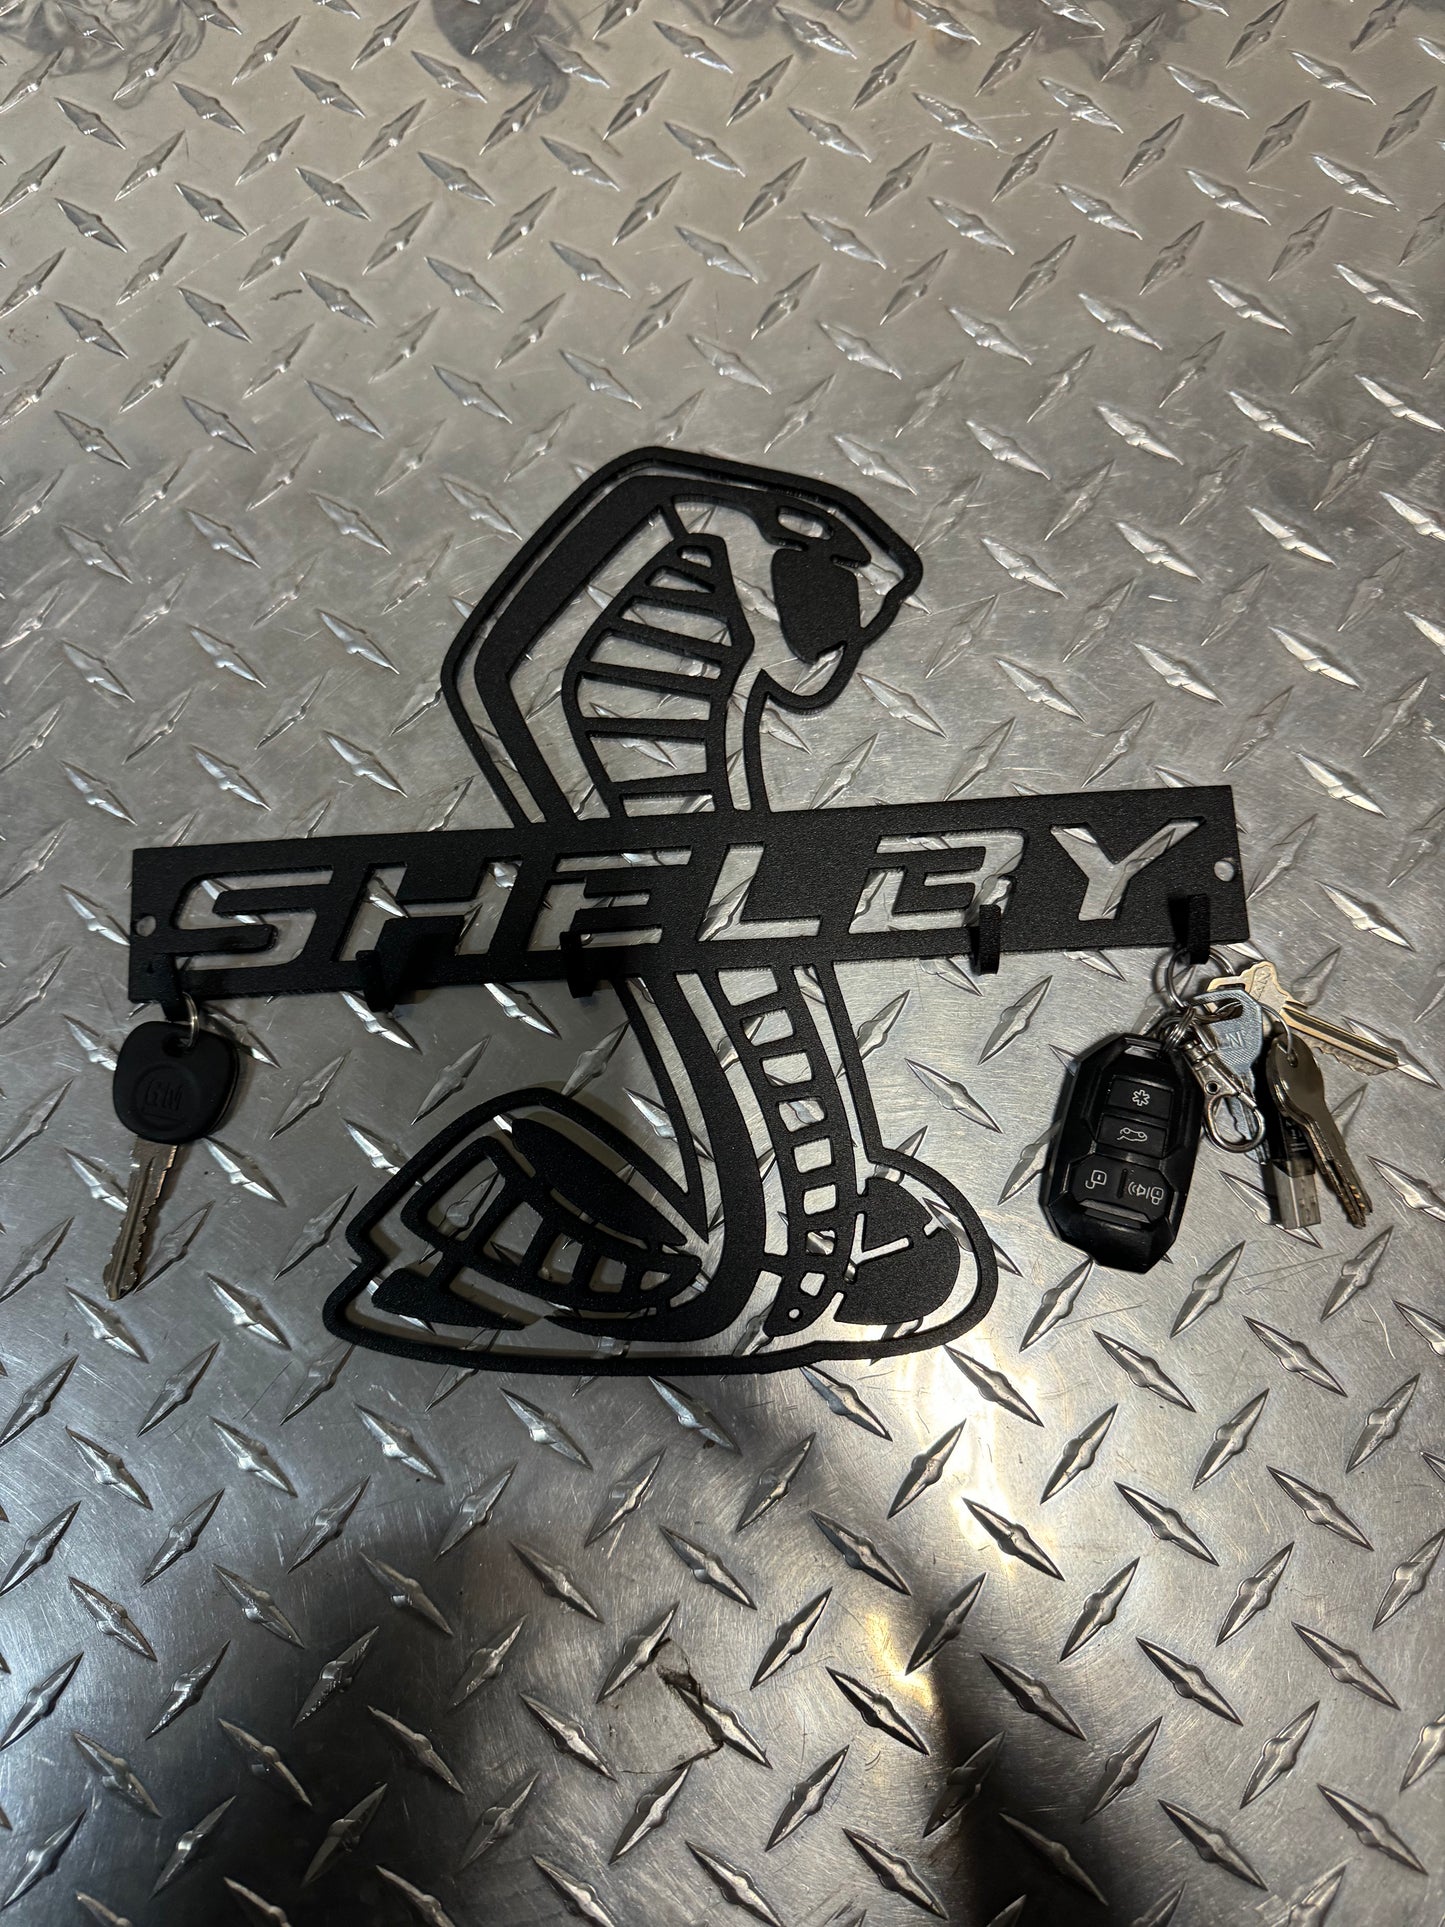 Shelby american key hanger